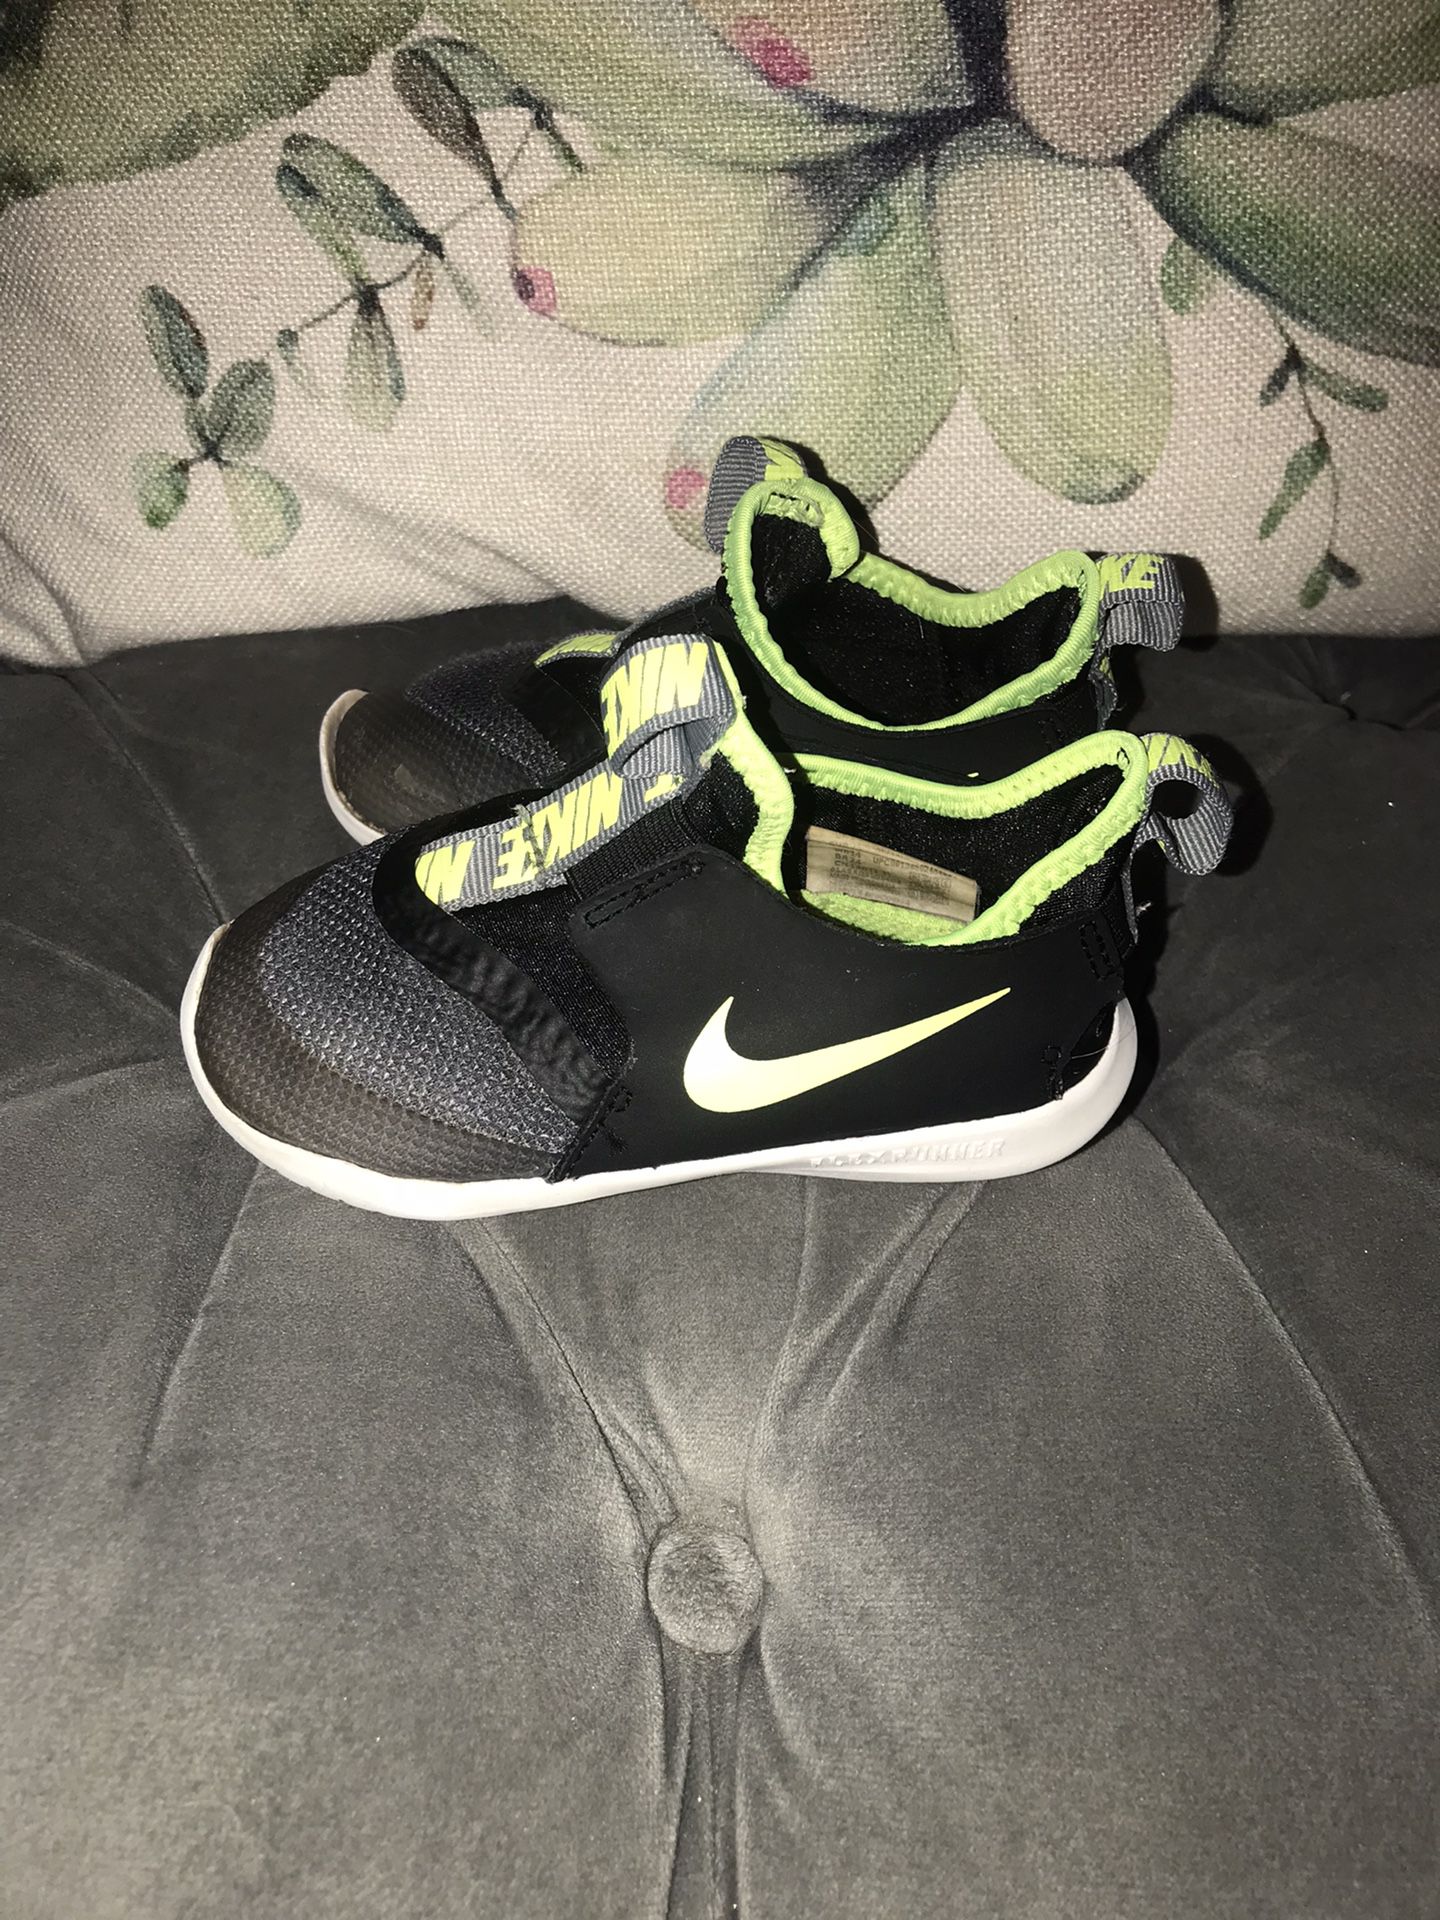 2 Pair Toddler Nikes Sz 6 & 7